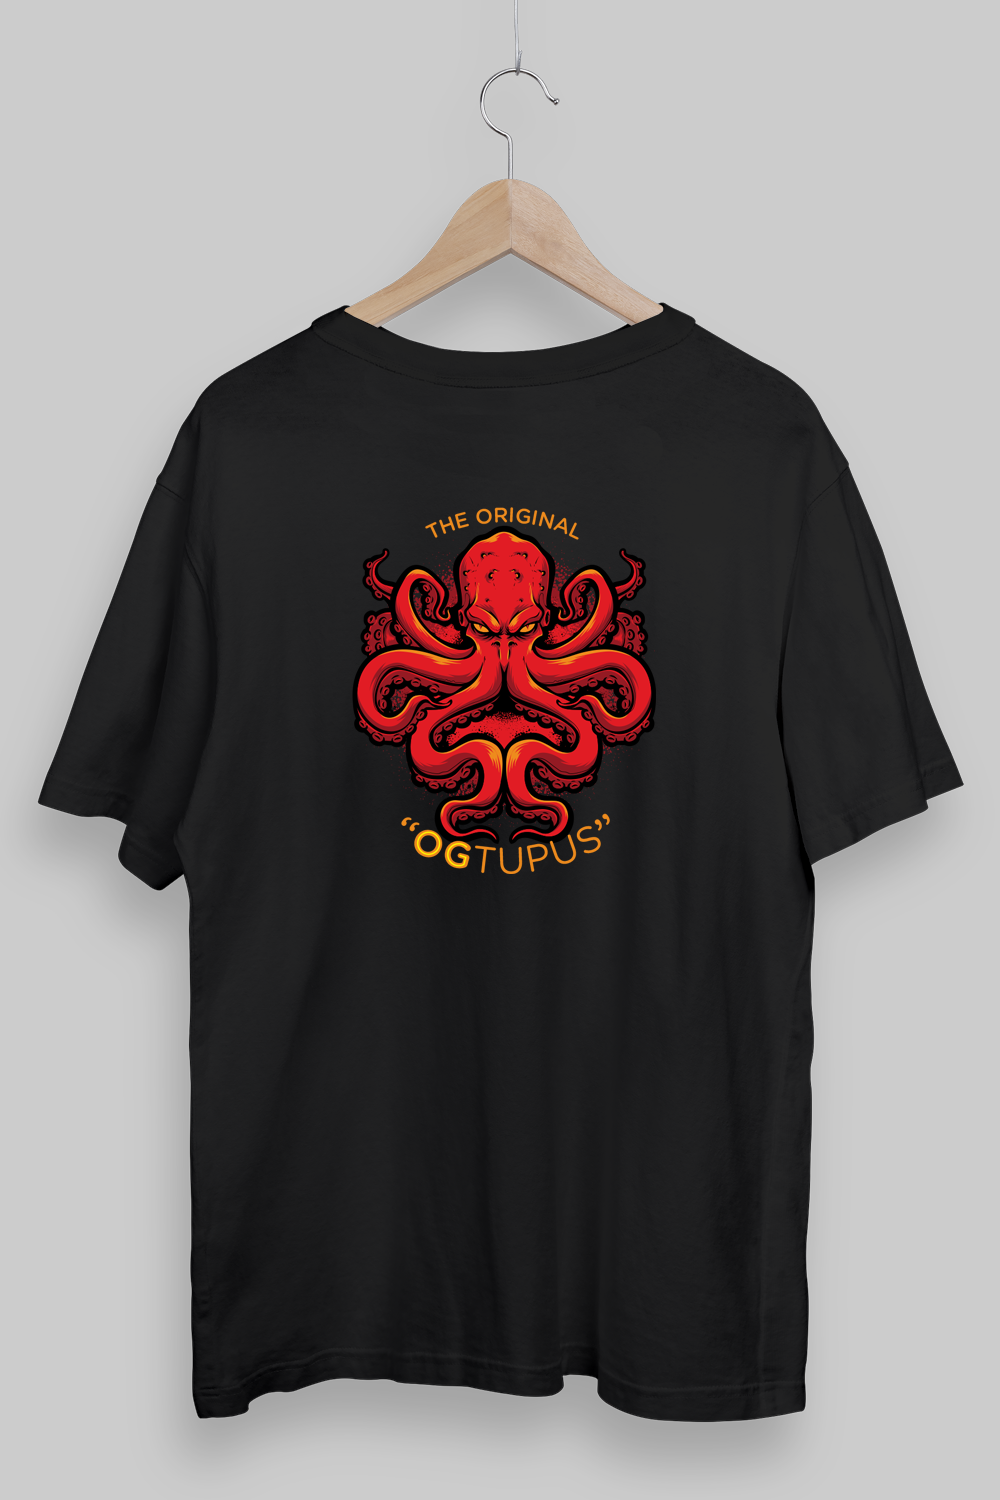 OGtupus Black Oversized T-shirt